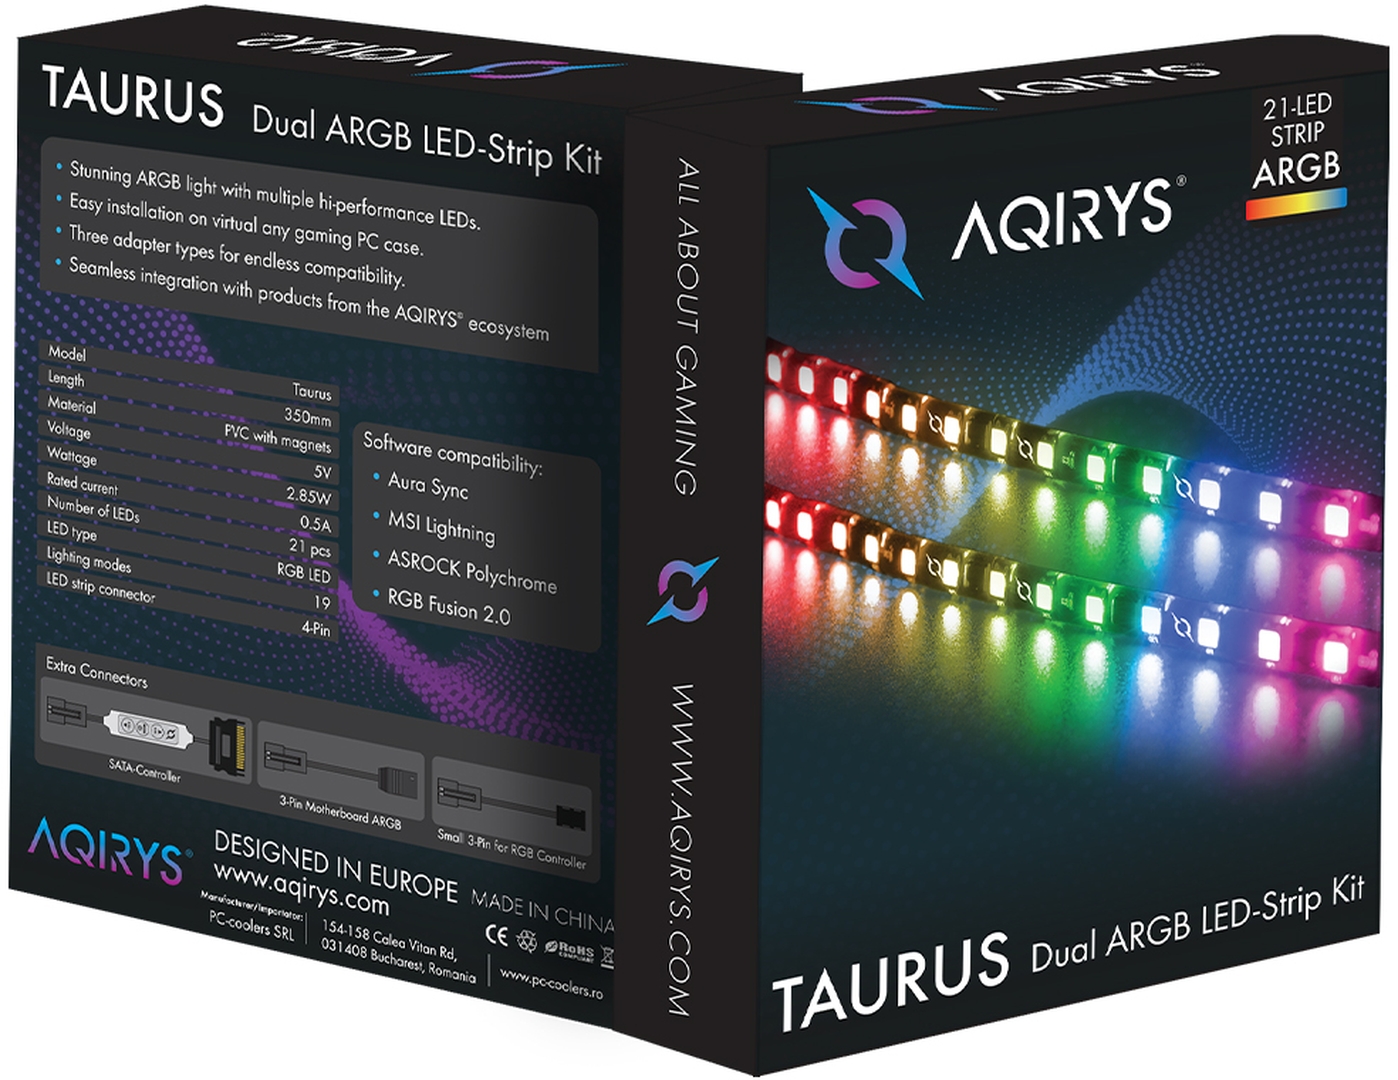 AQIRYS Kit Dual ARGB LED-Strip AQIRYS Taurus